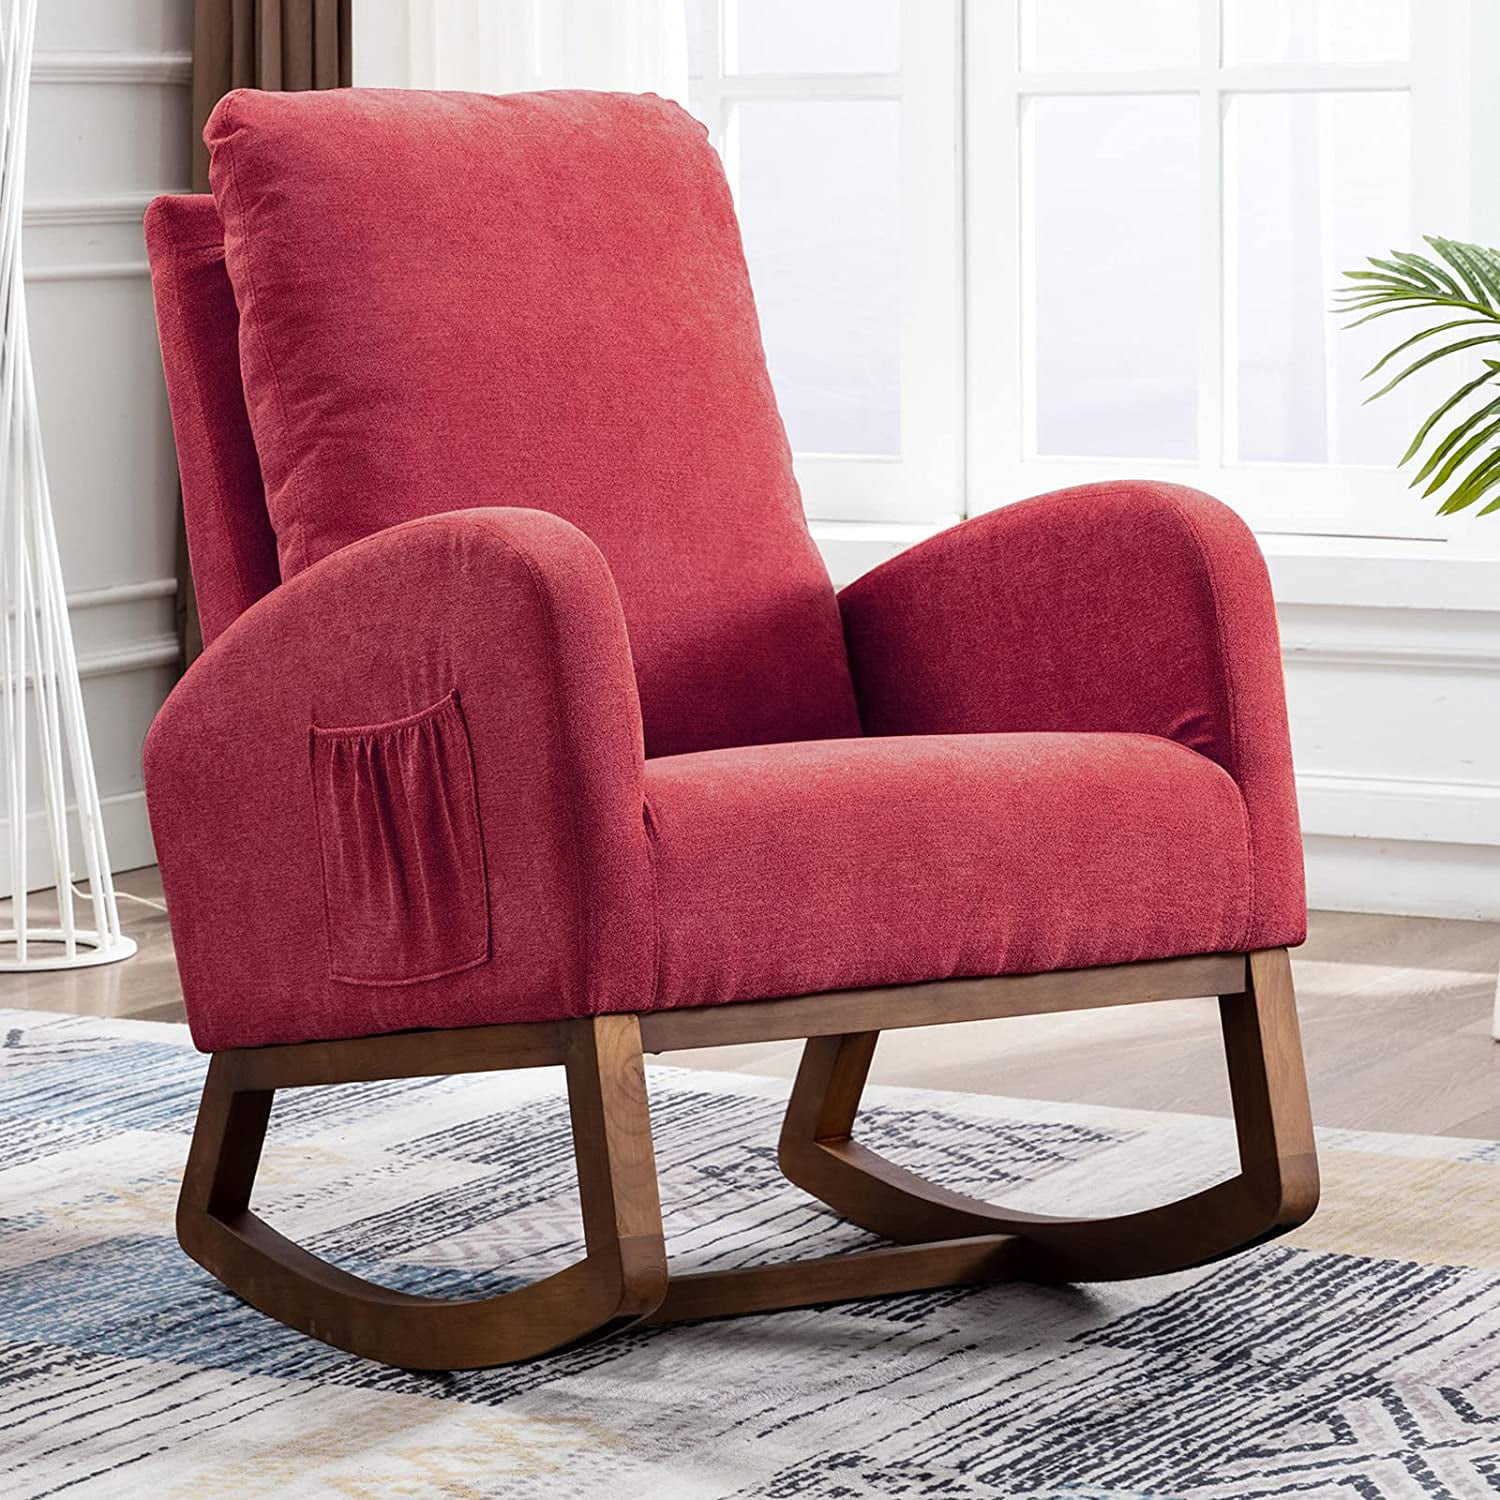 Velvet/Linen/PU Rocking Chair Relaxing Armchair Ergonomic Padded Seat Wing Back 